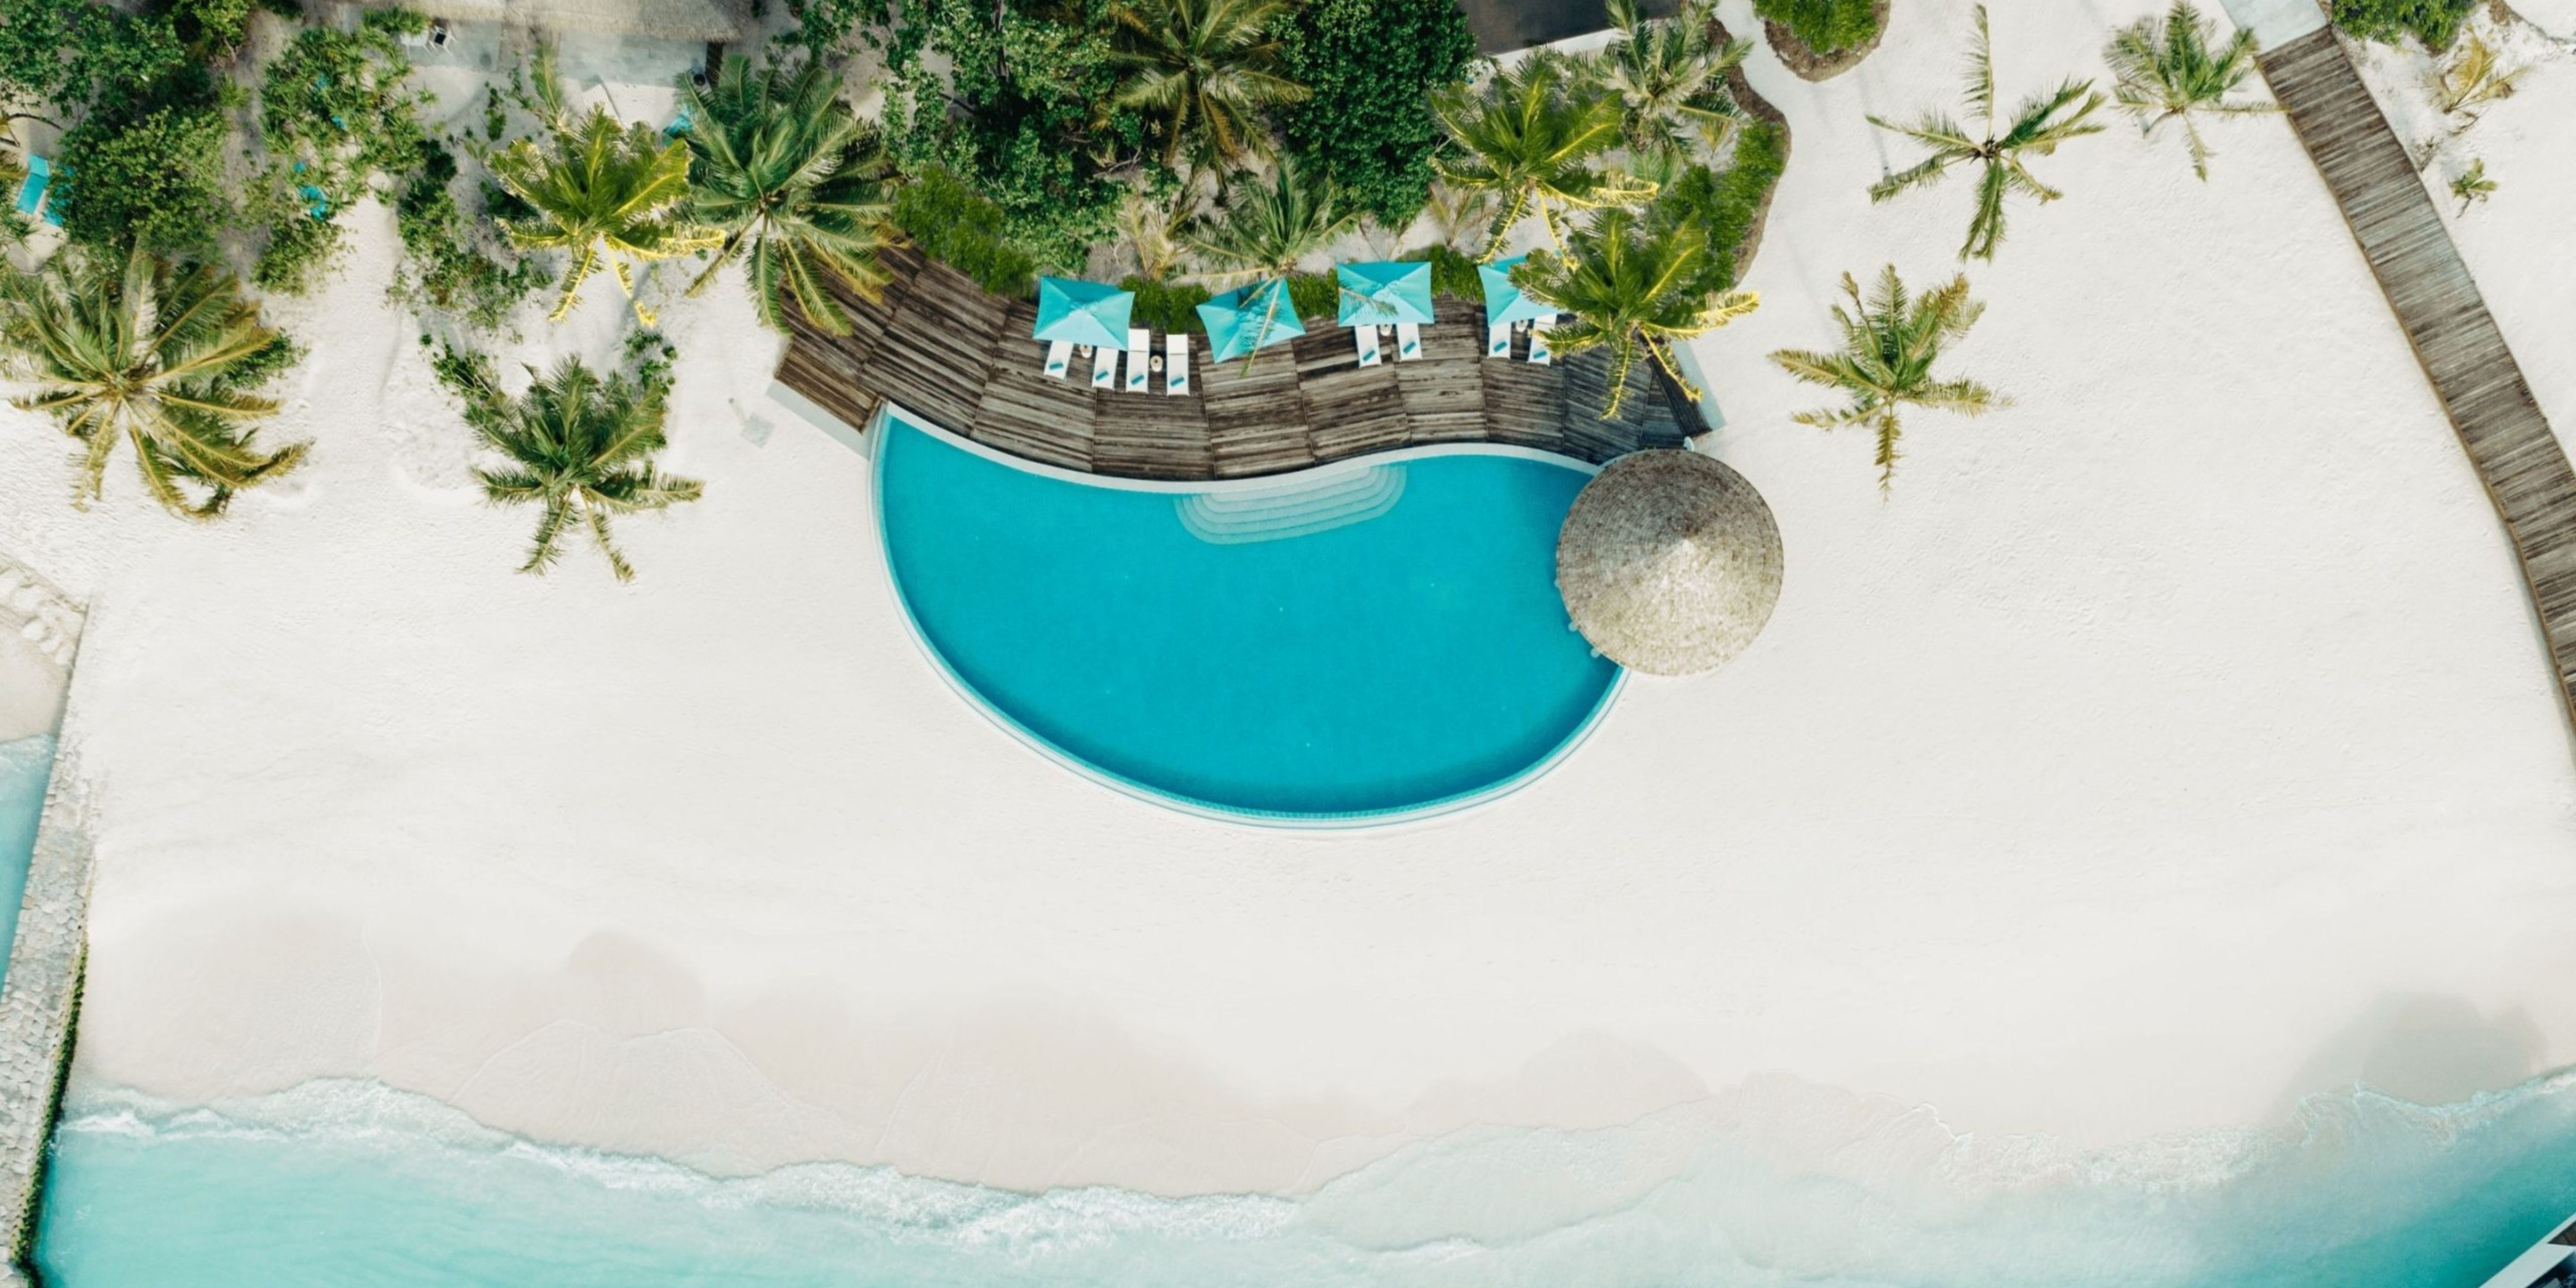 Nova Maldives: A Contemporary All-Inclusive Resort for Your Ultimate Island Getaway